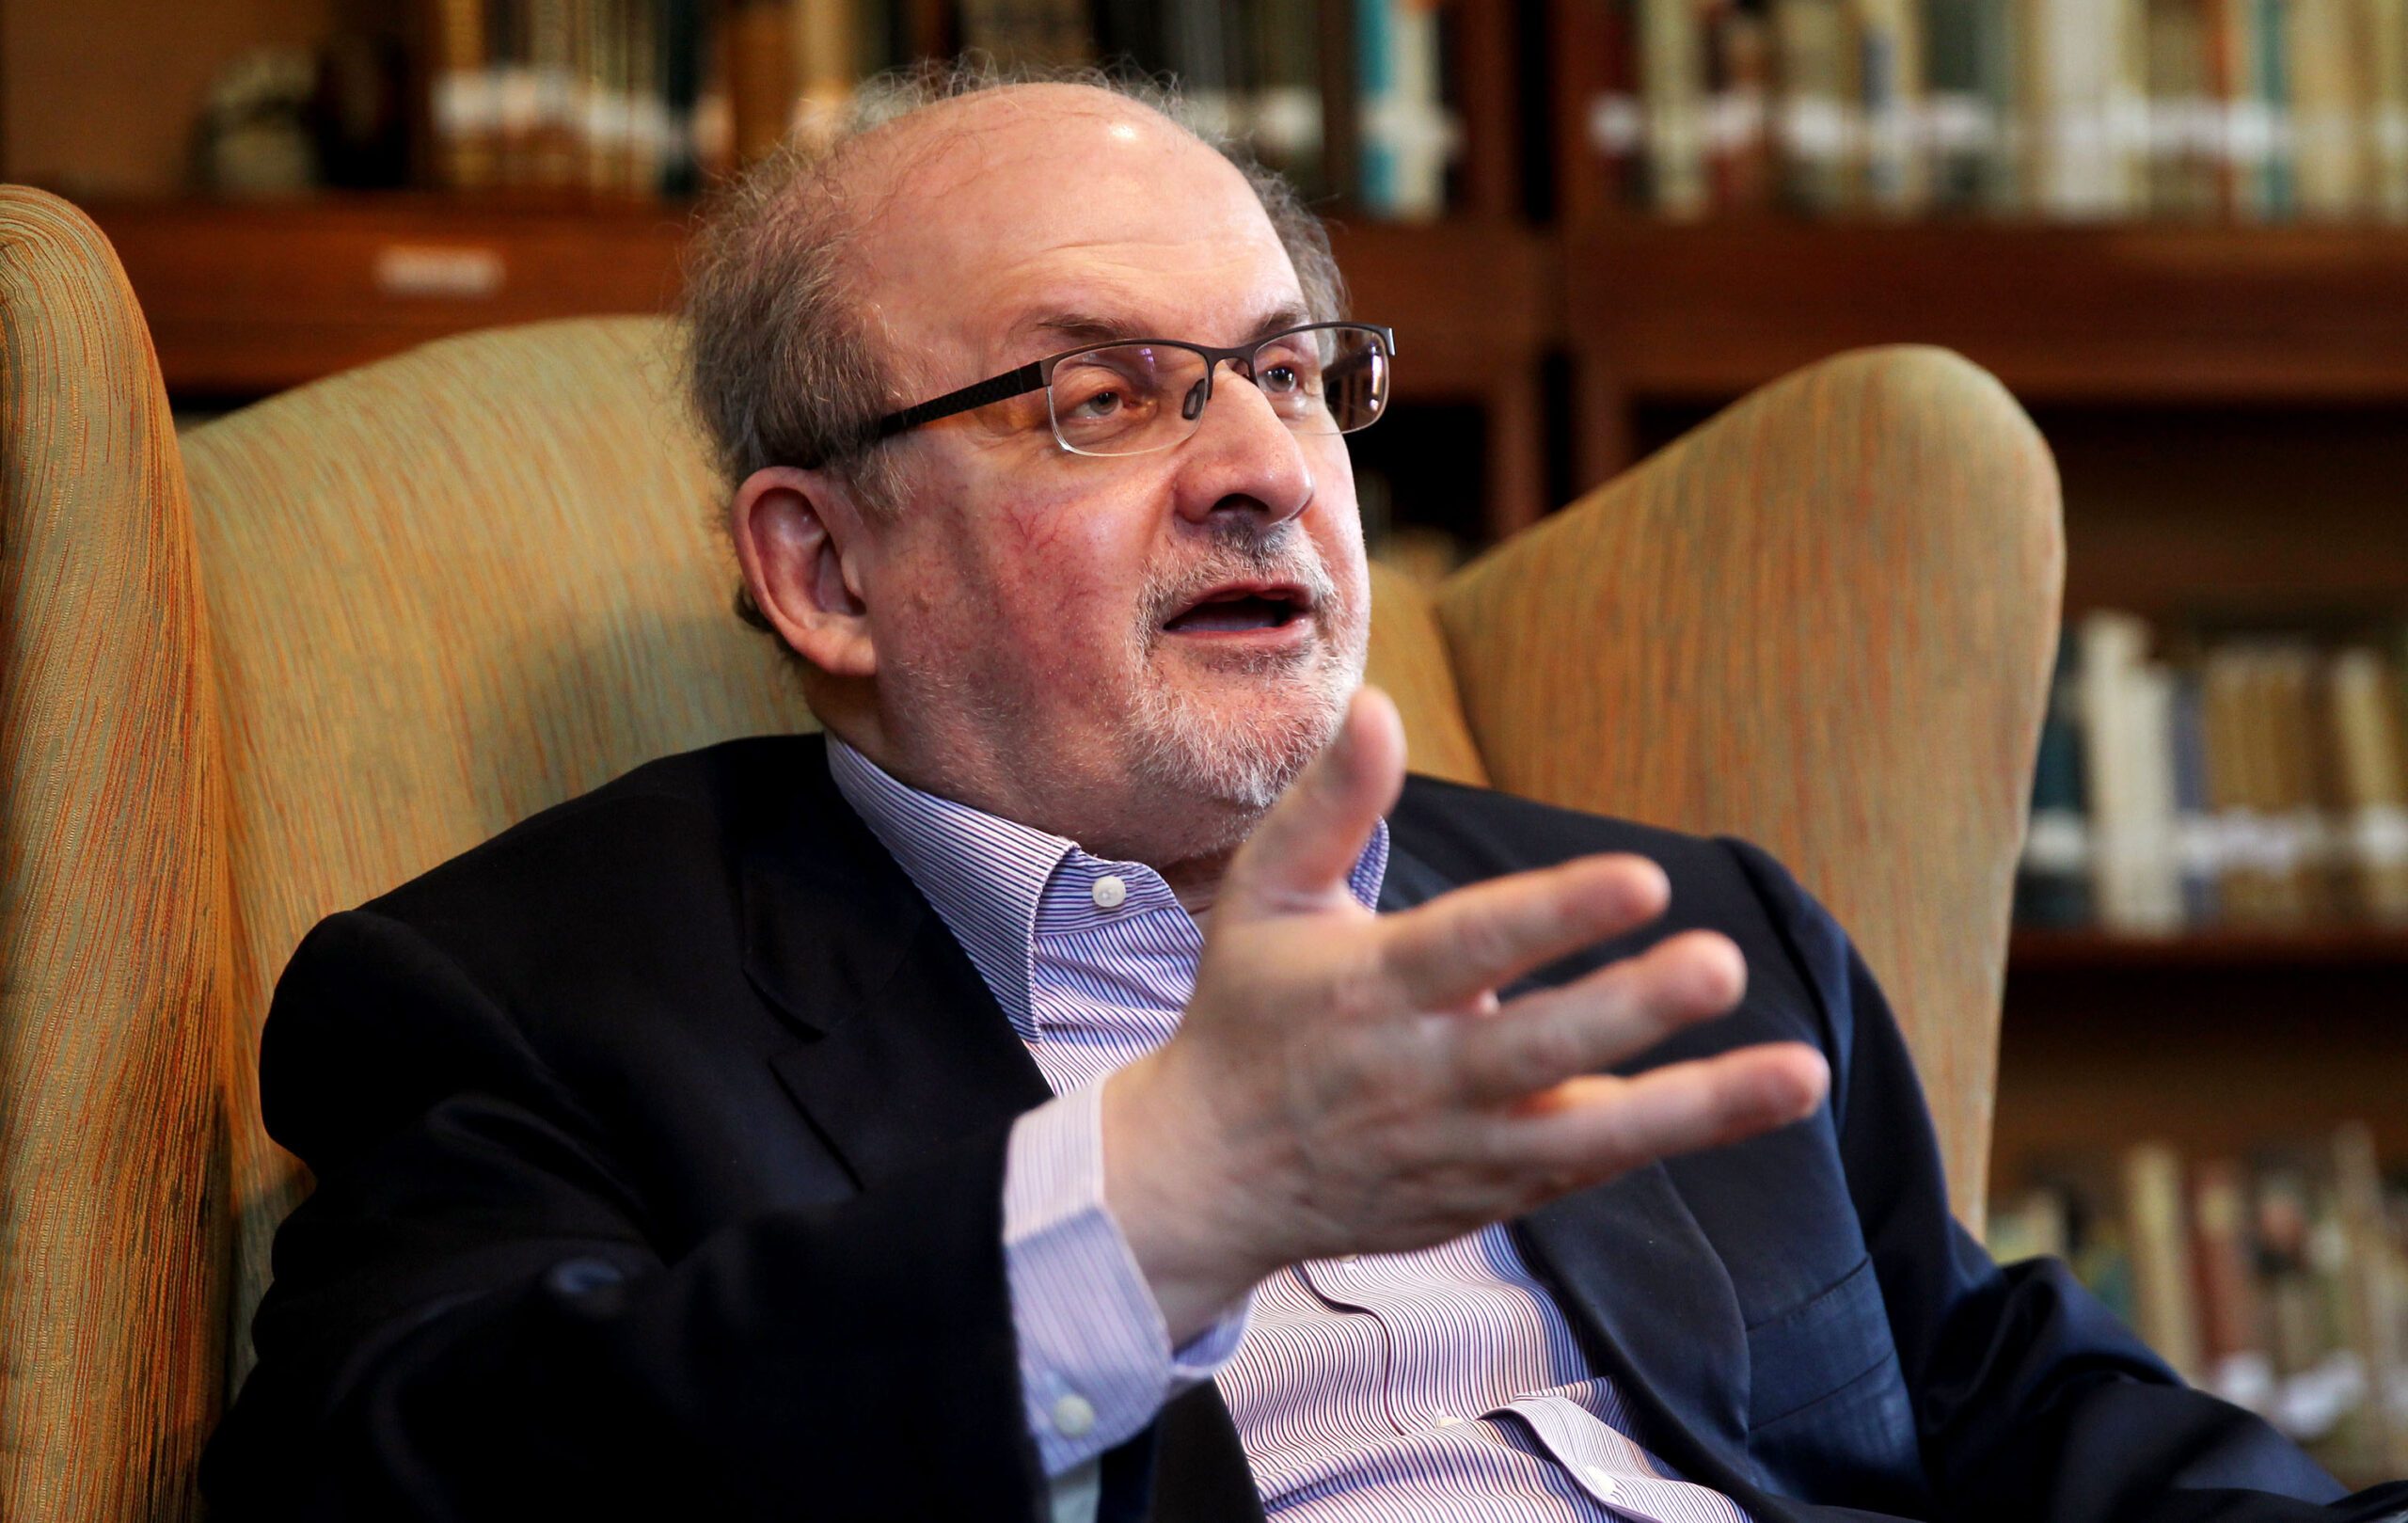 Swedish Academy finally condemns fatwa against writer Salman Rushdie